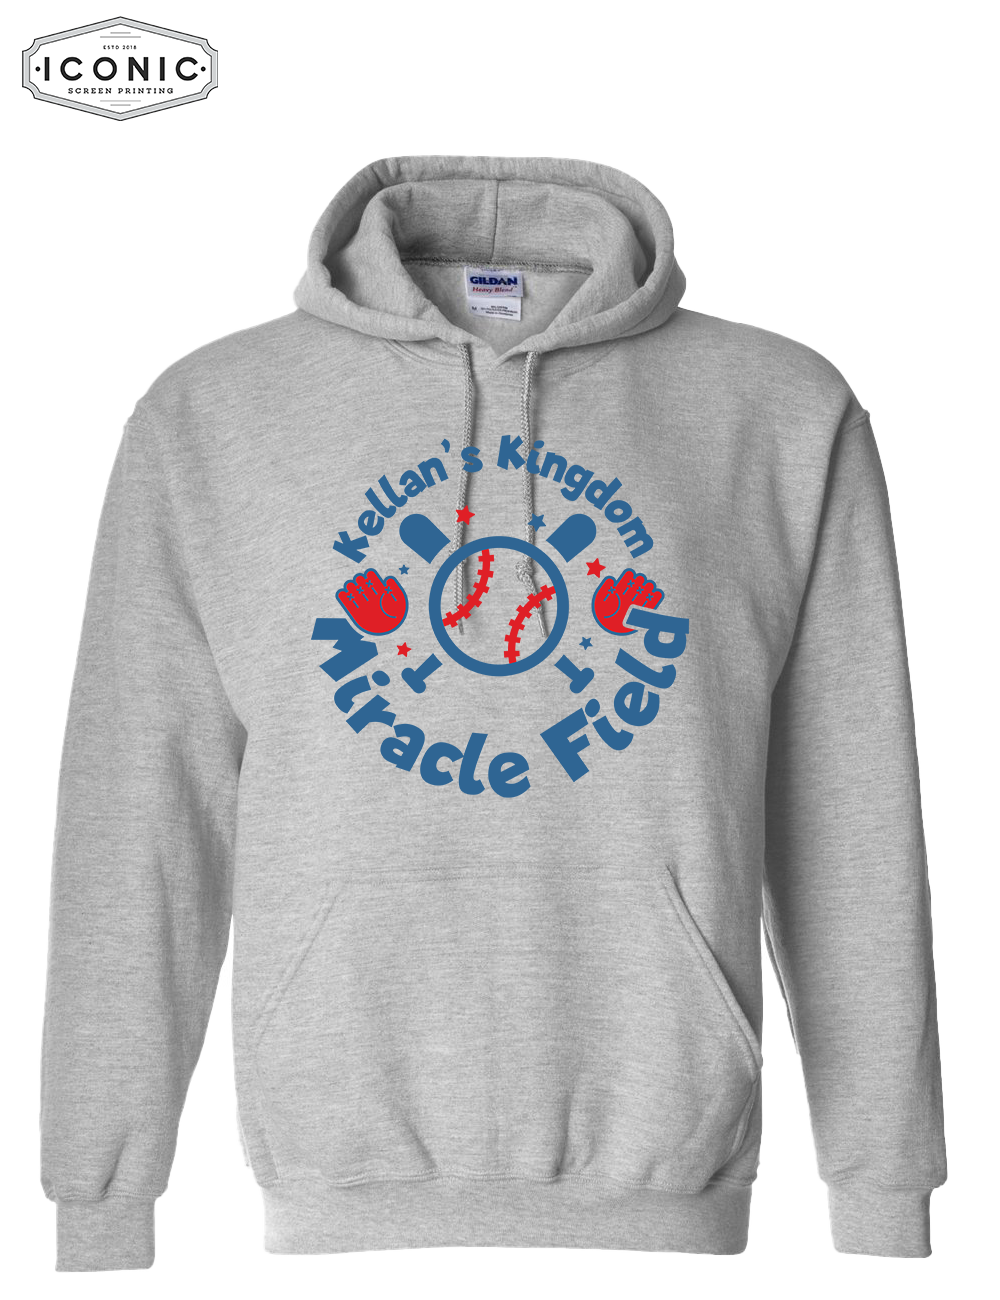 Baseball Glove - Heavy Blend Hooded Sweatshirt